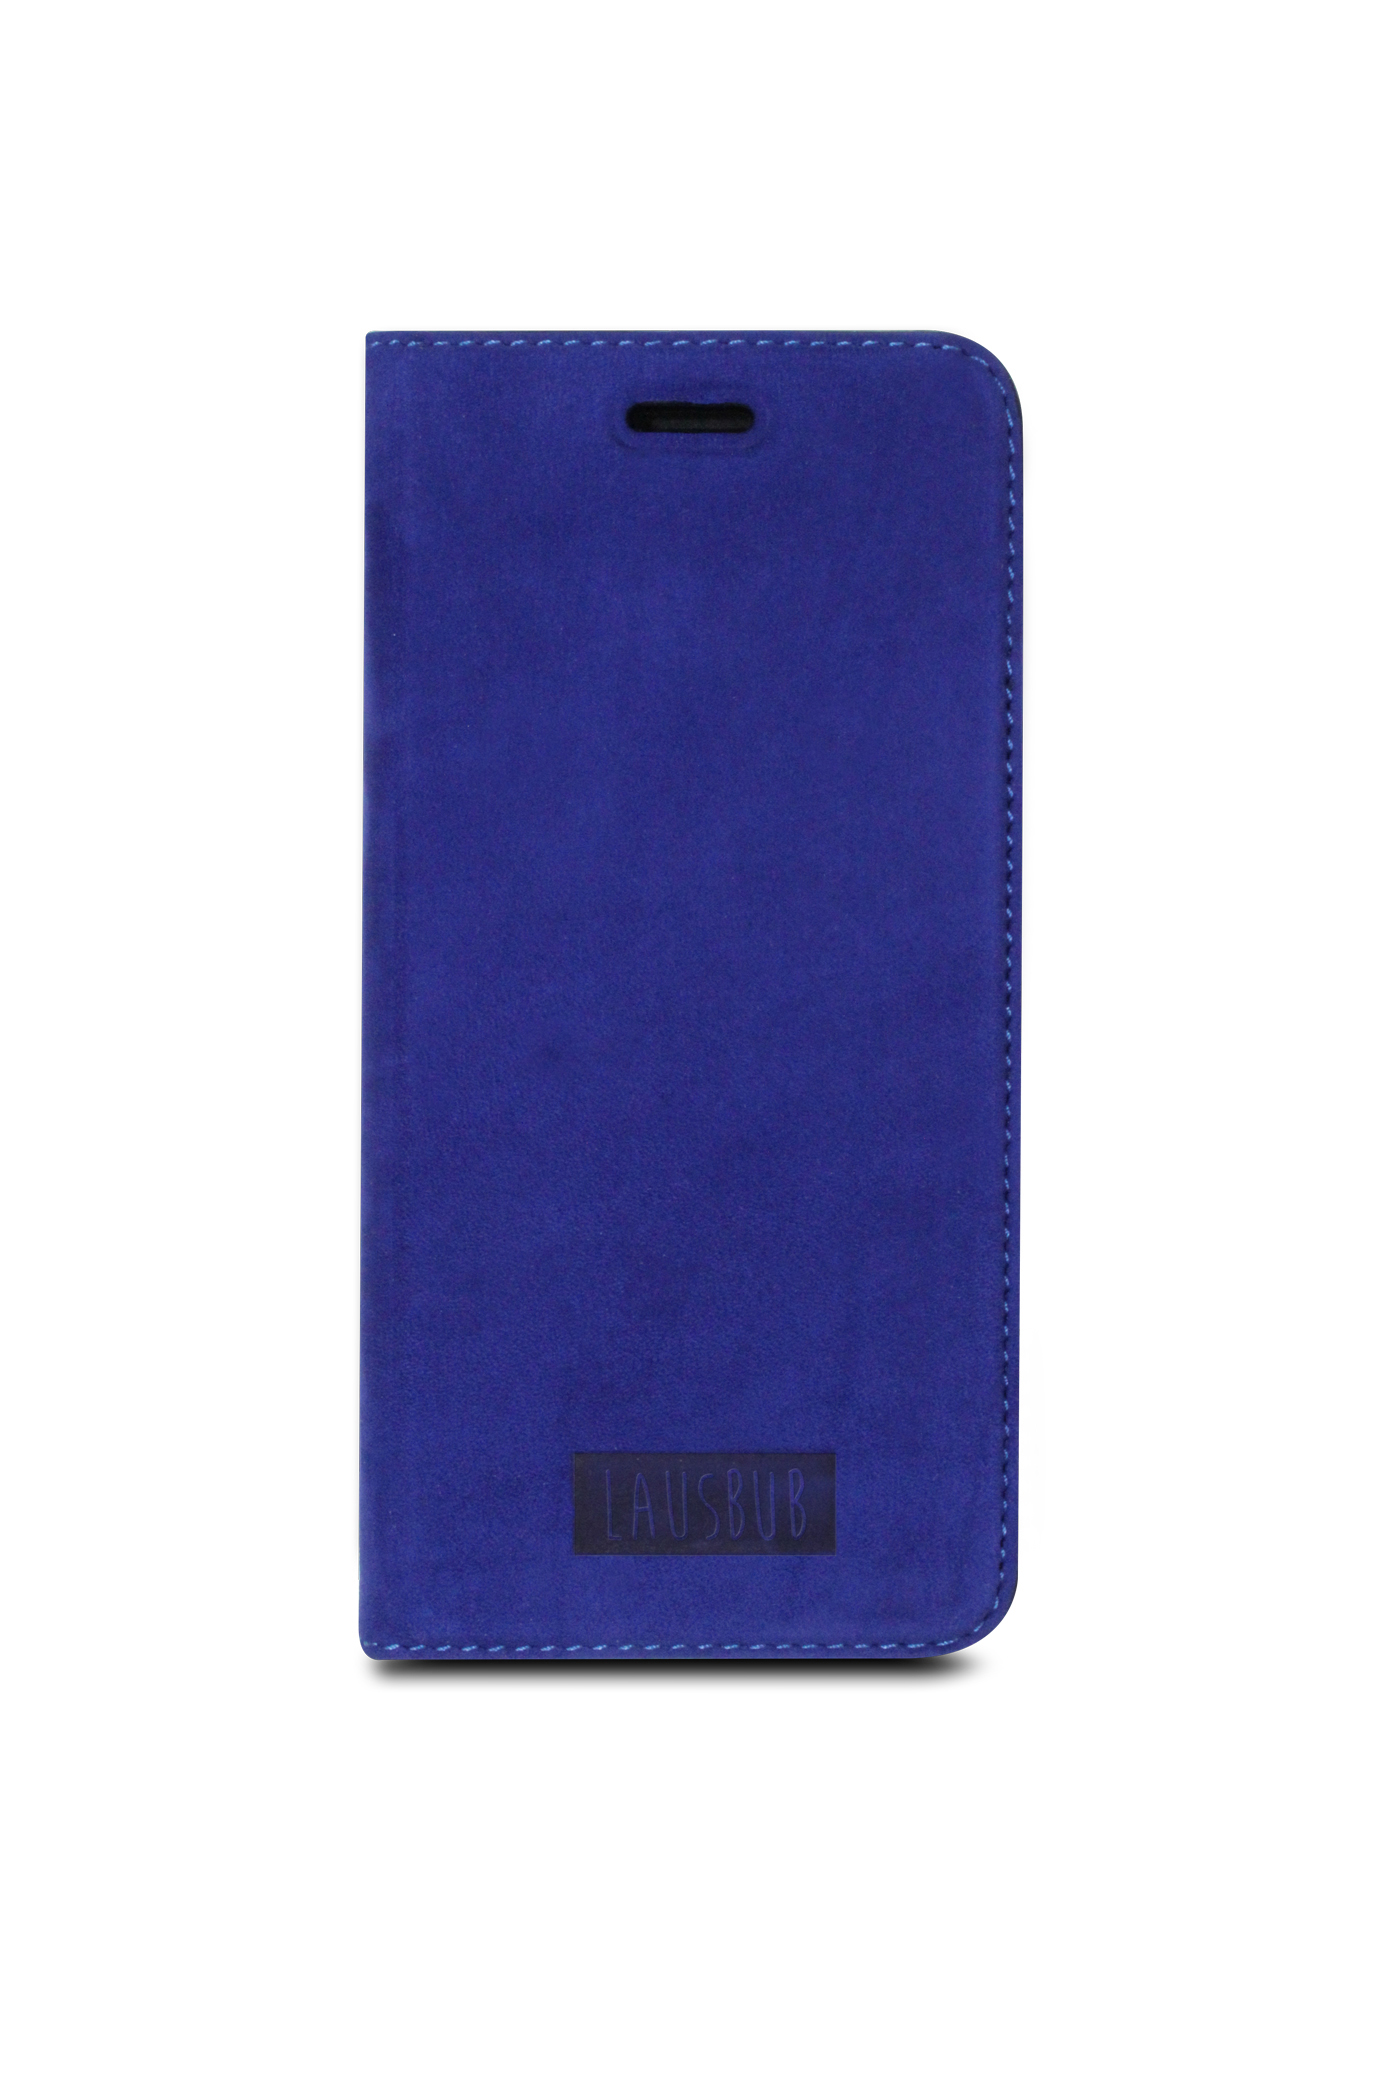 Bookcover, Blue Apple, 6s, Velvet LAUSBUB iPhone iPhone 6, Frechdachs,